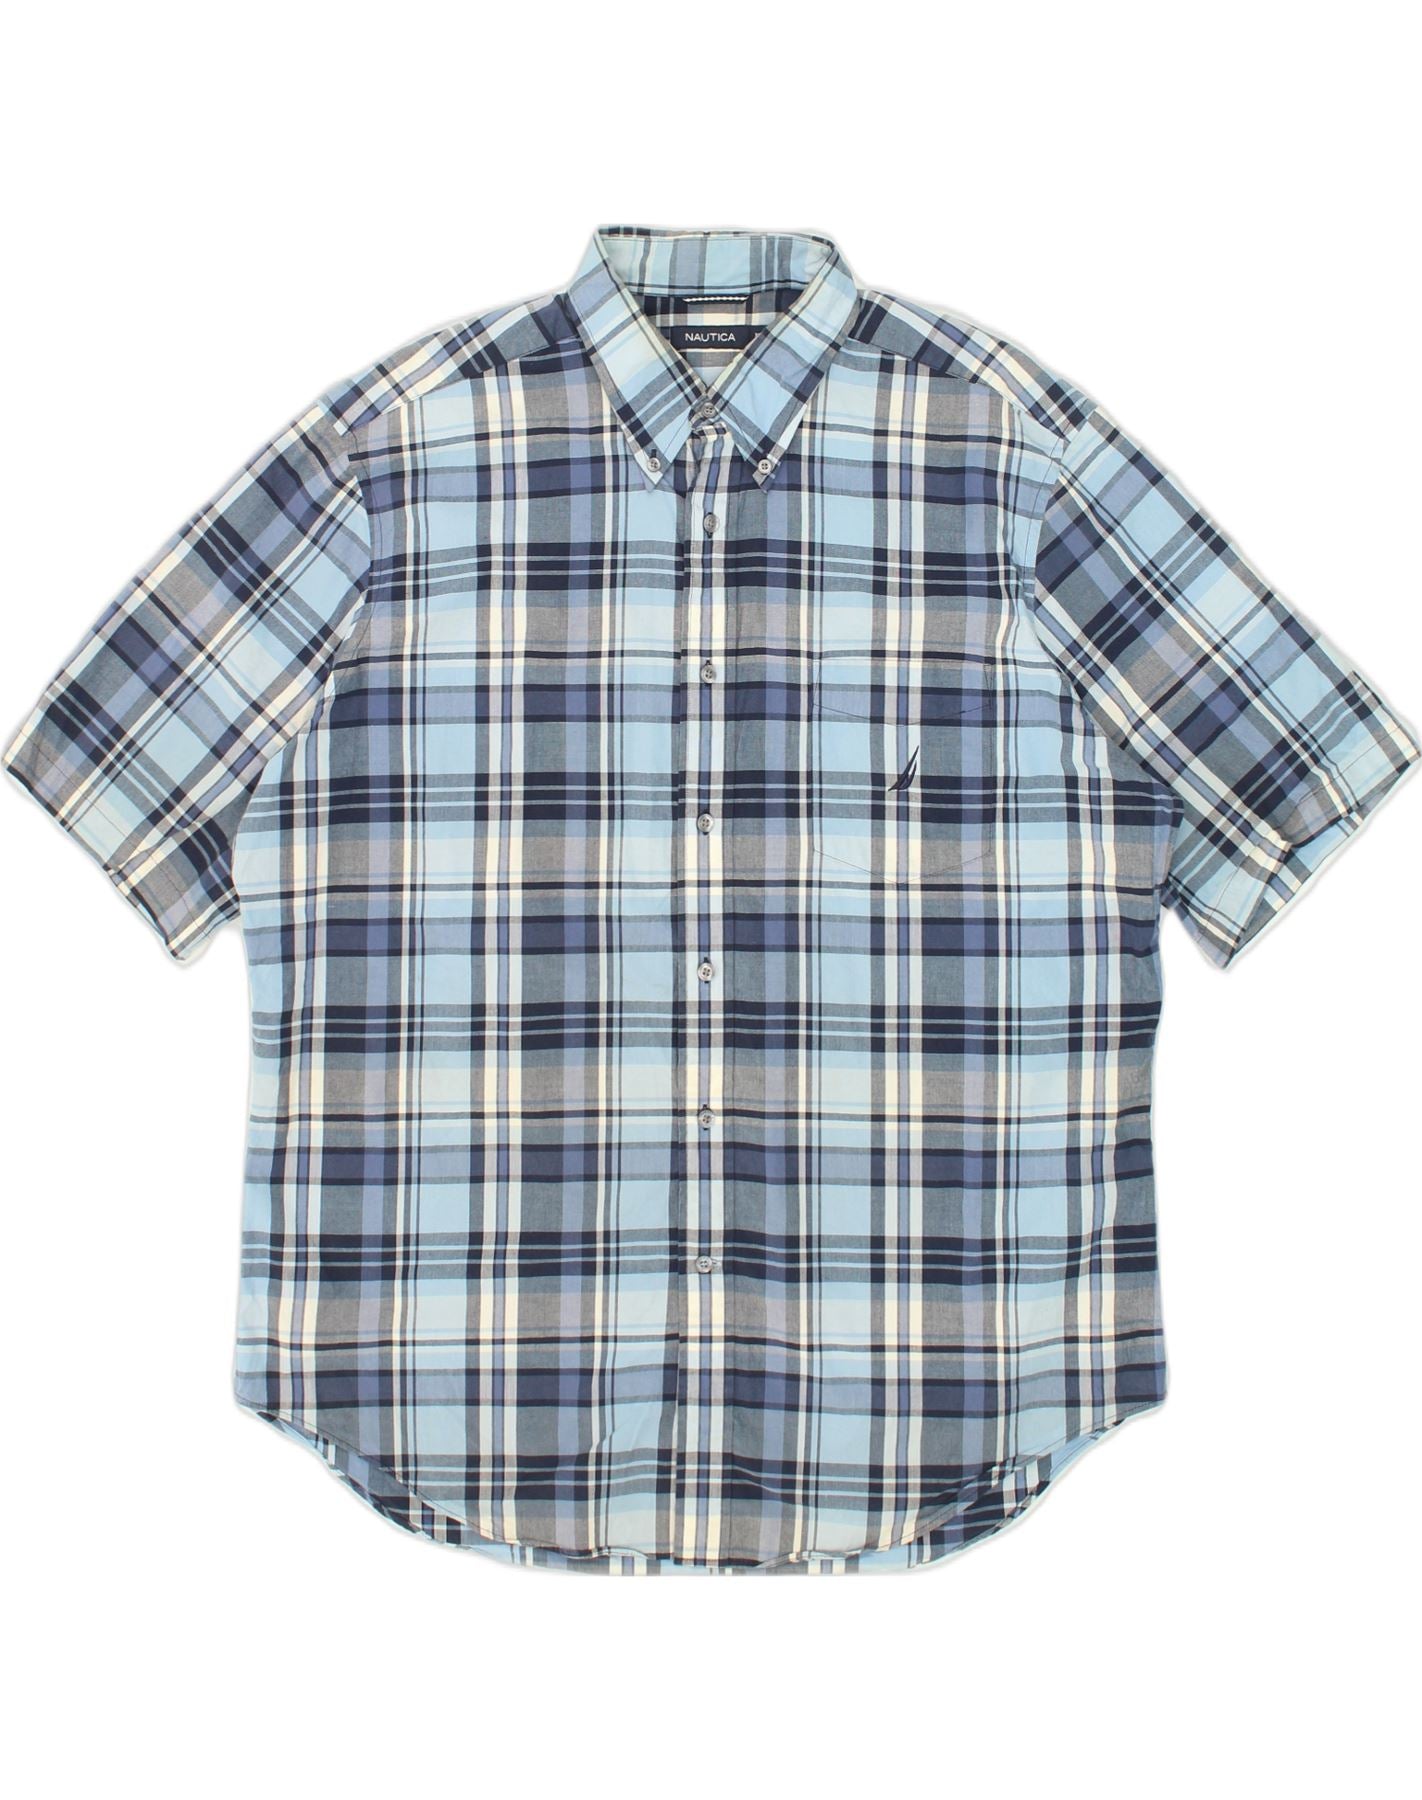 NAUTICA Mens Short Sleeve Shirt XL Blue Check Cotton